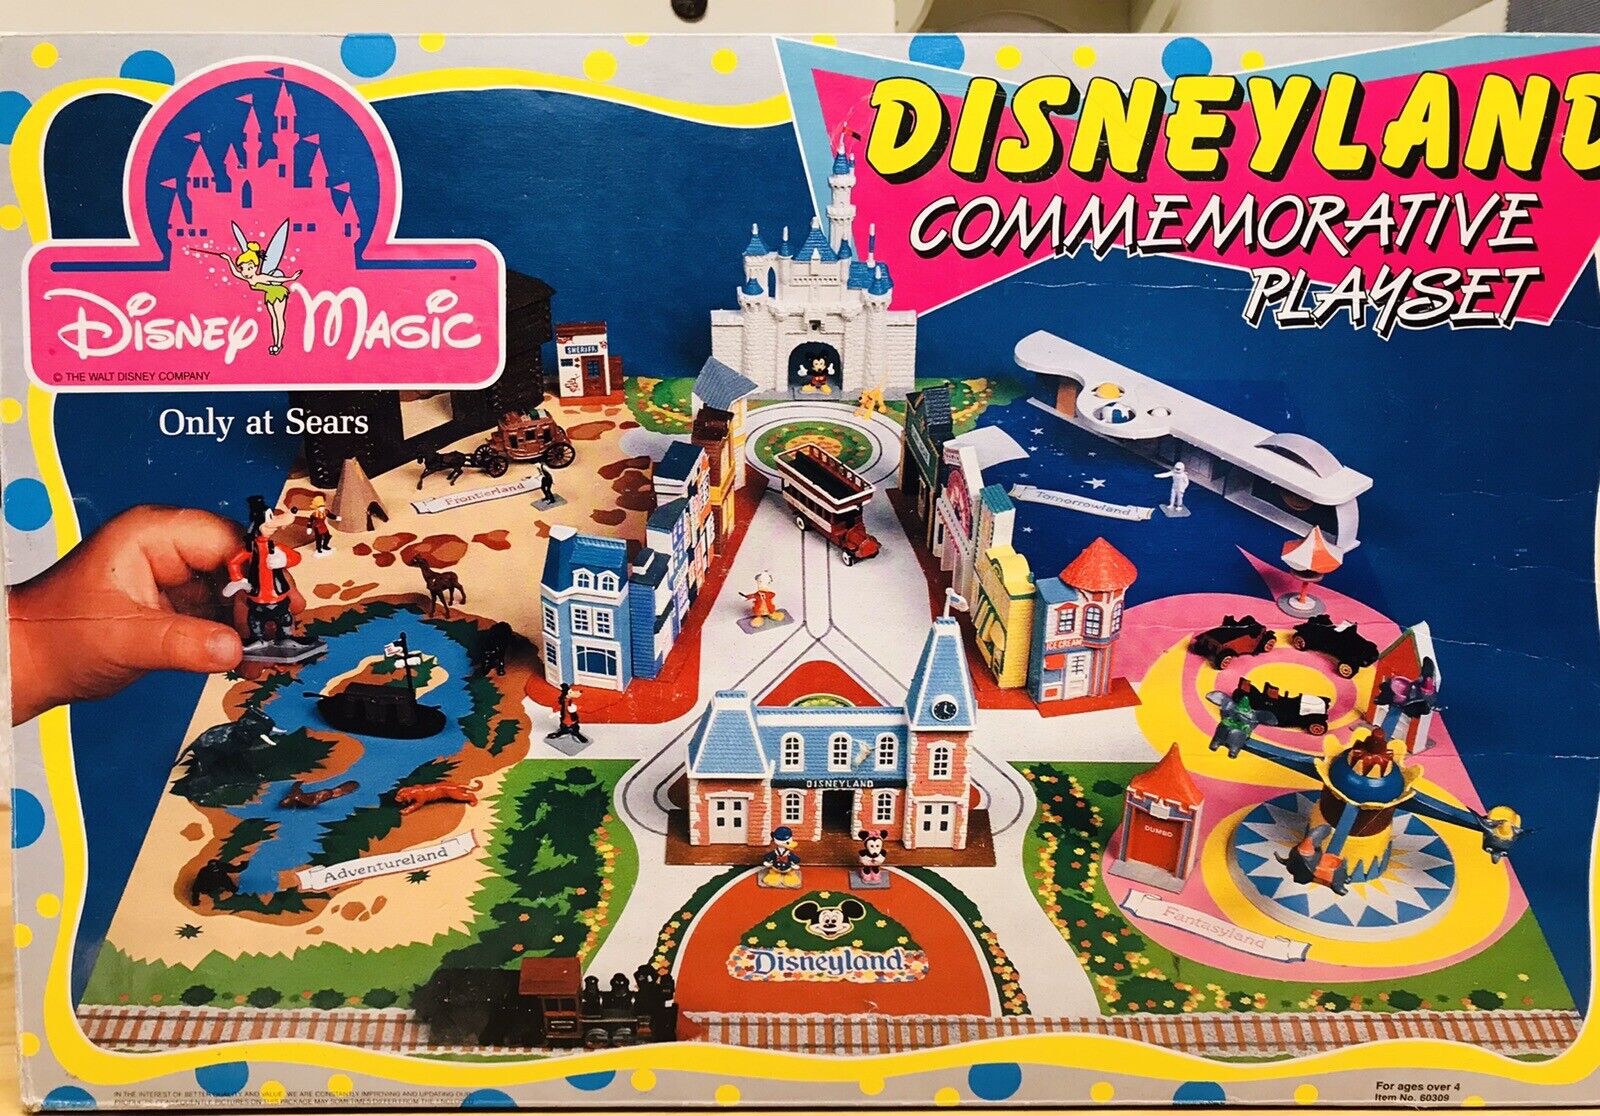 DISNEYLAND COMMEMORATIVE PLAYSET 1988 Walt Disney Company - Disney Magic Sears